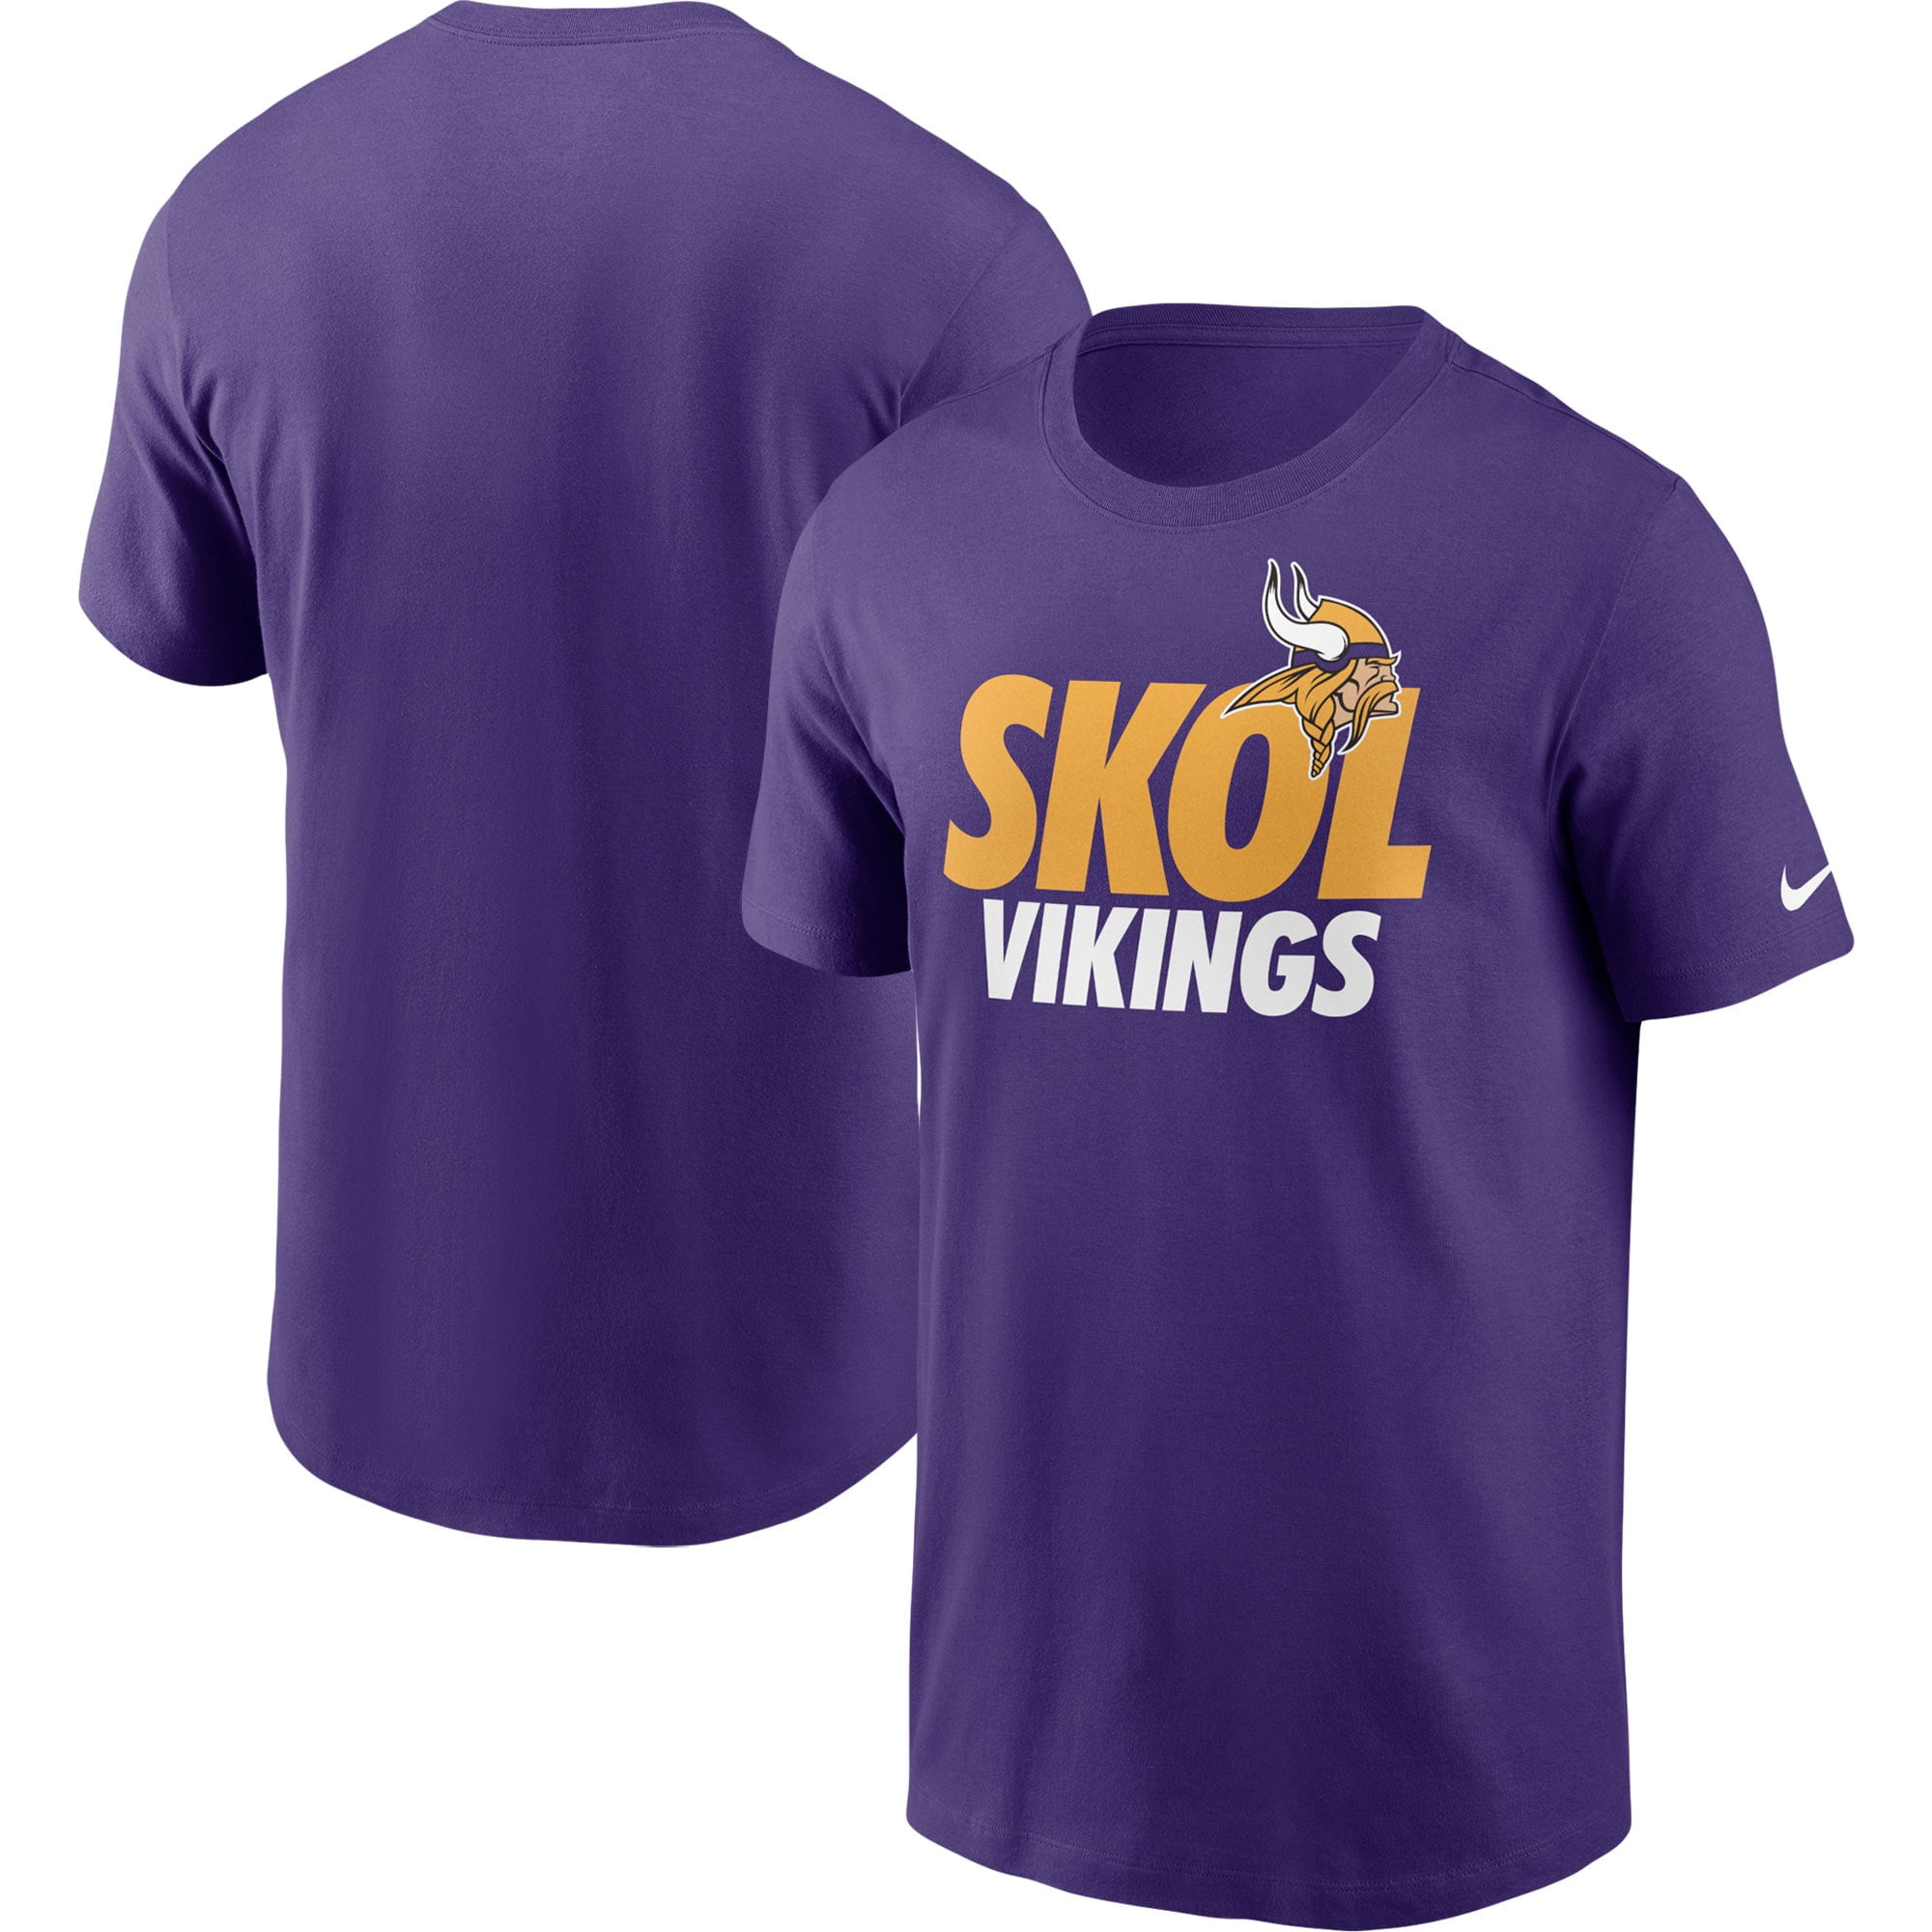 Men's Nike Purple Minnesota Vikings Hometown Collection Skol T